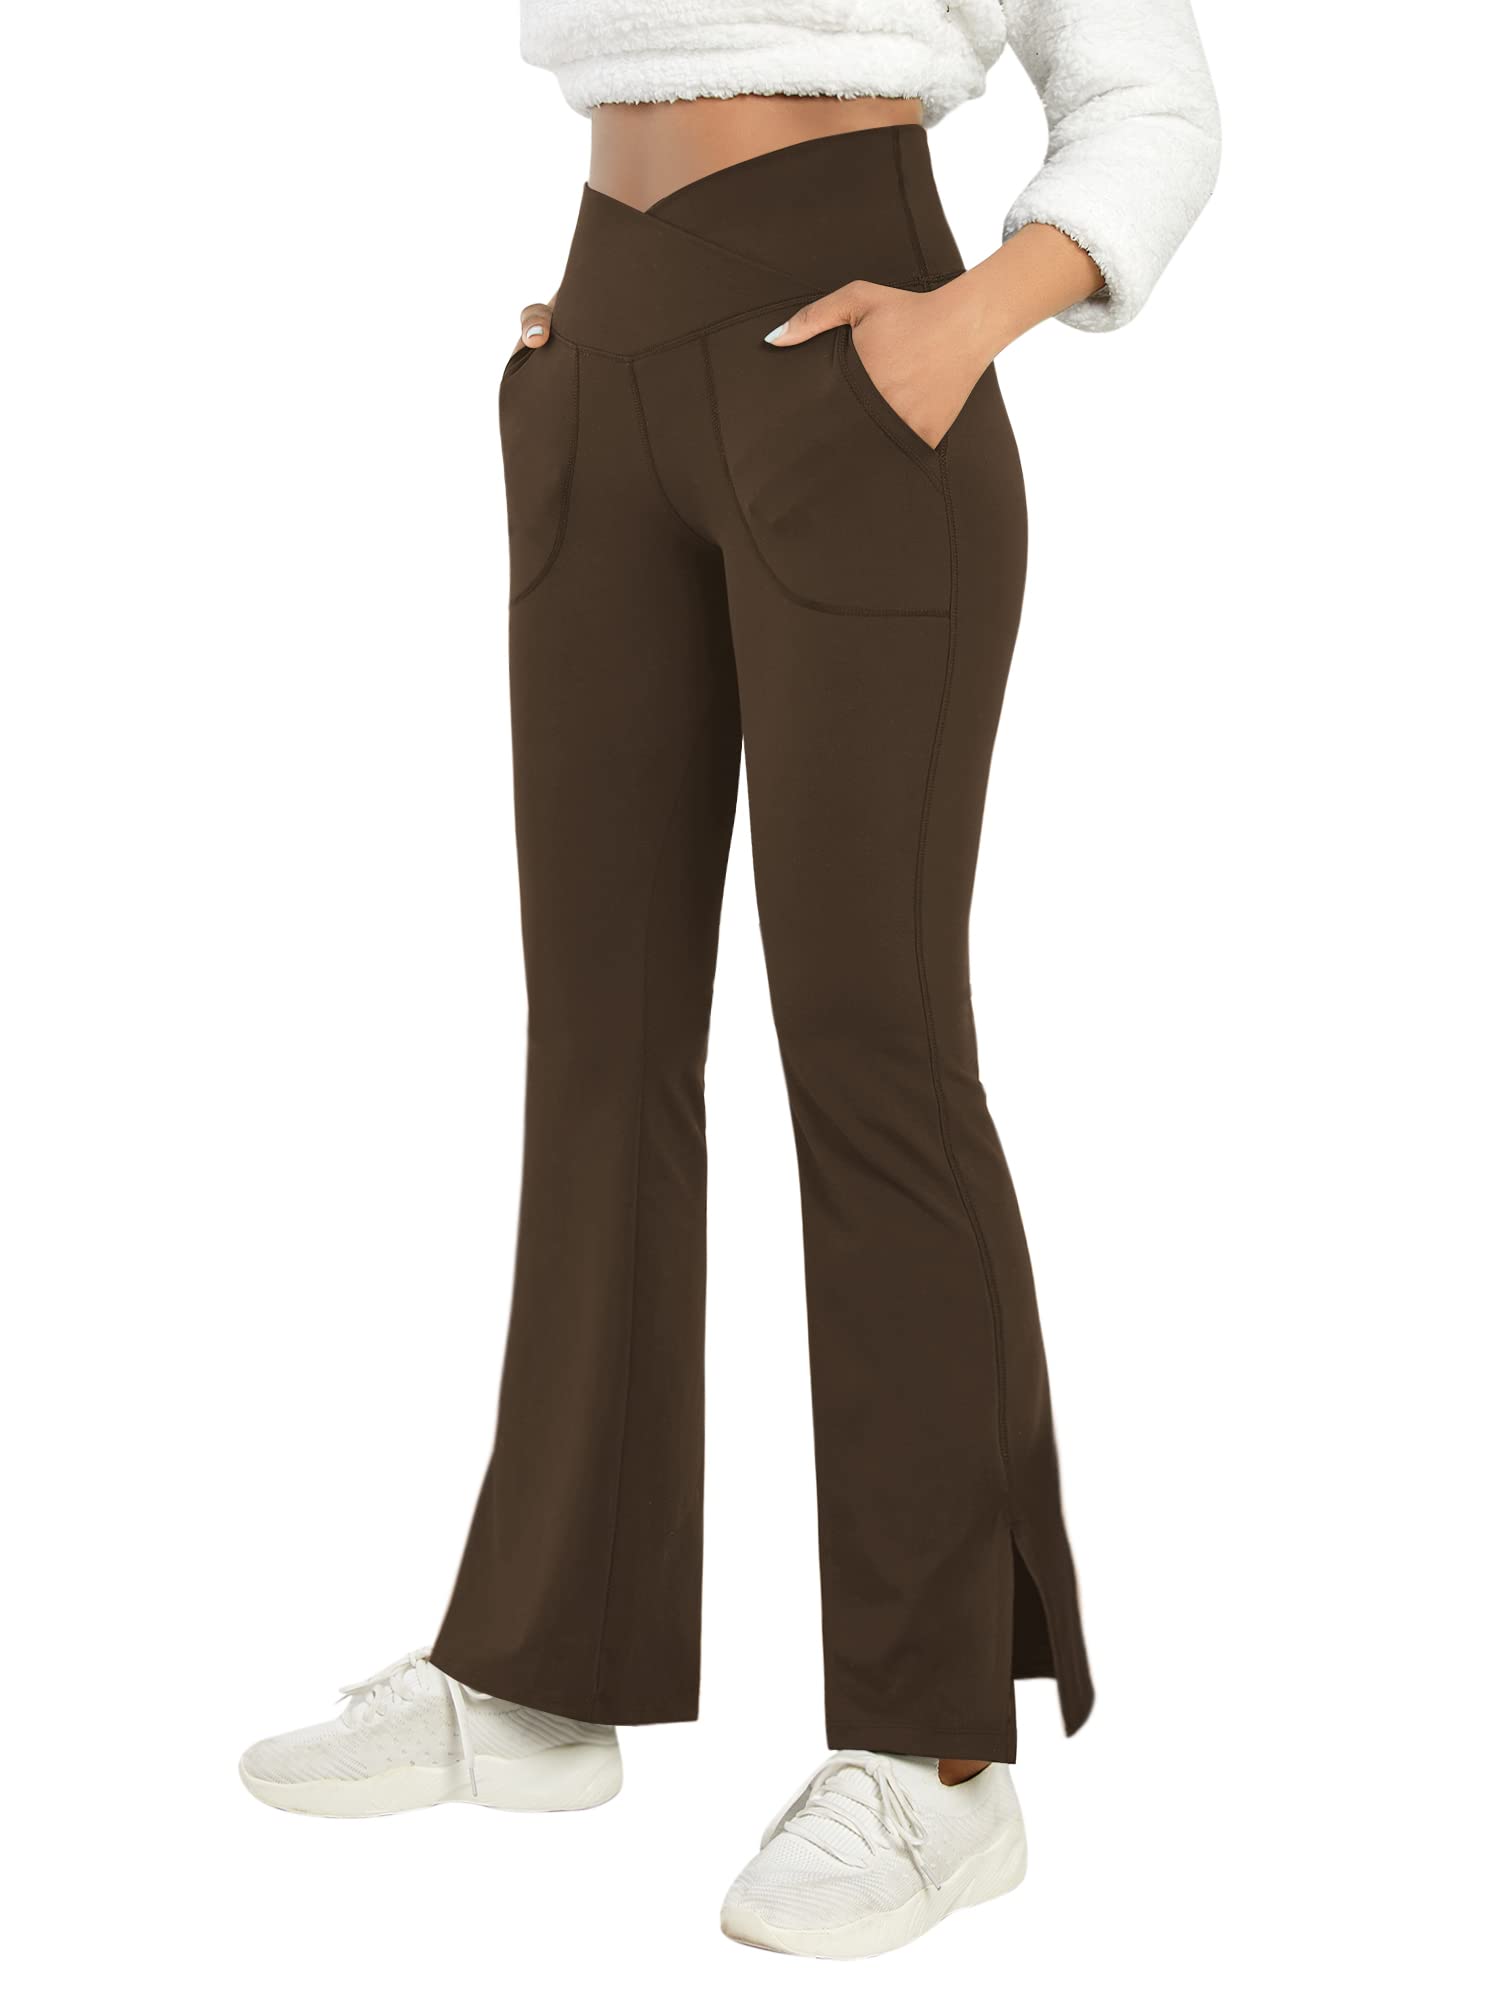 Shakti Pants - XL / Coral  Pants, High waisted pants, Clothes